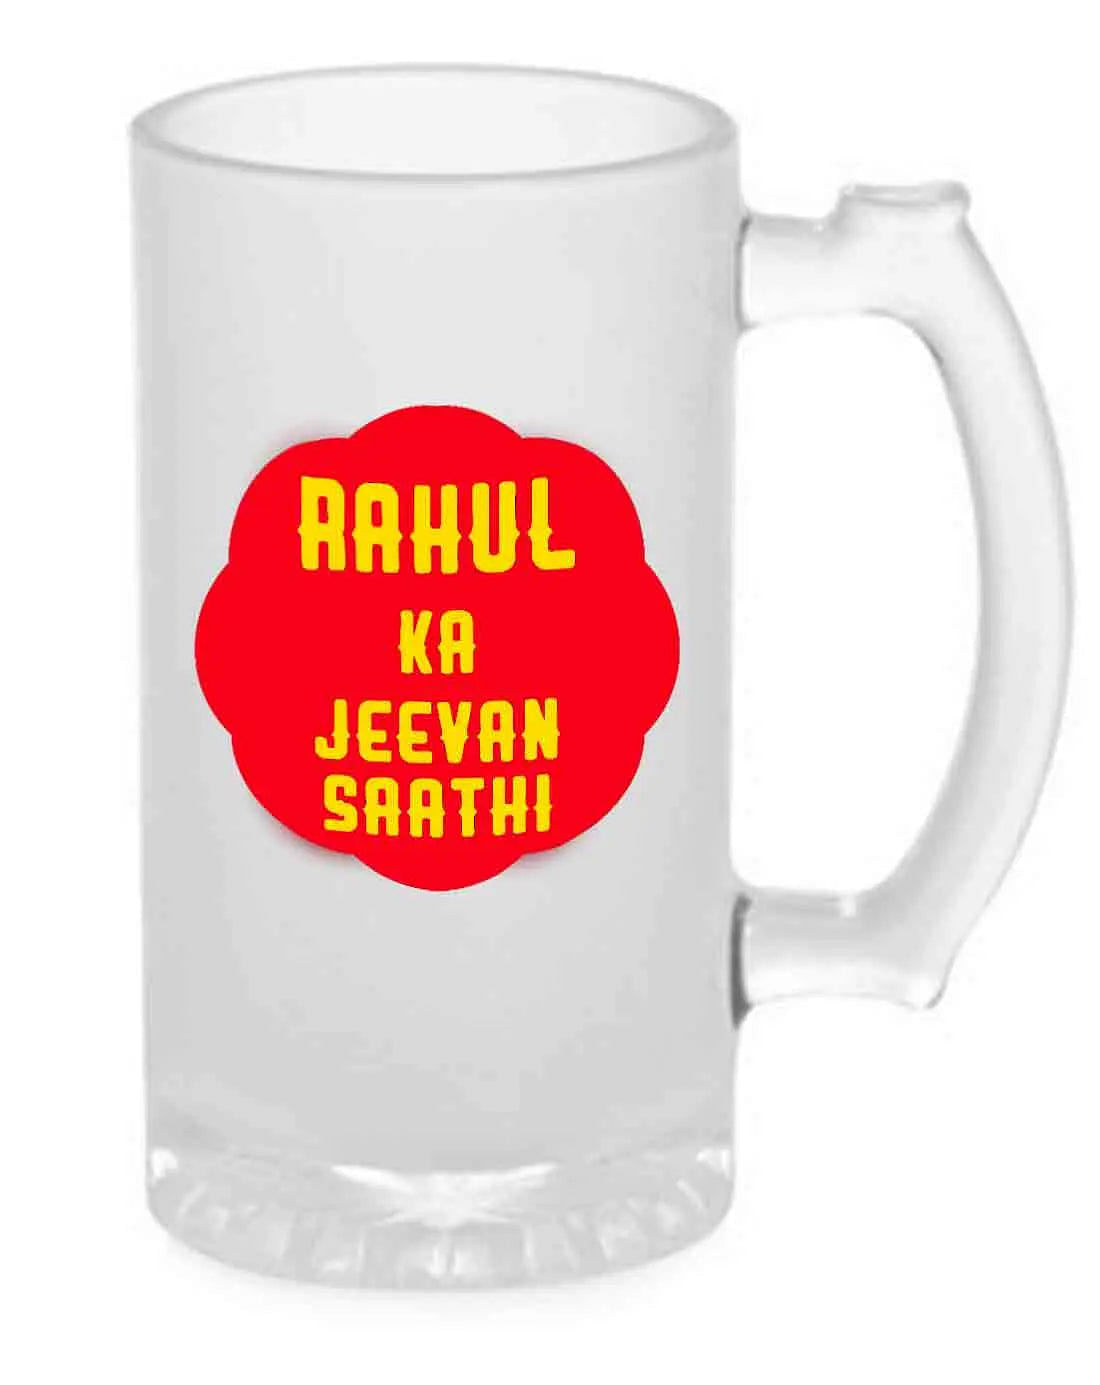 Personalized Custom Beer Mug - Add Your Name - Jeevansathi Nutcase